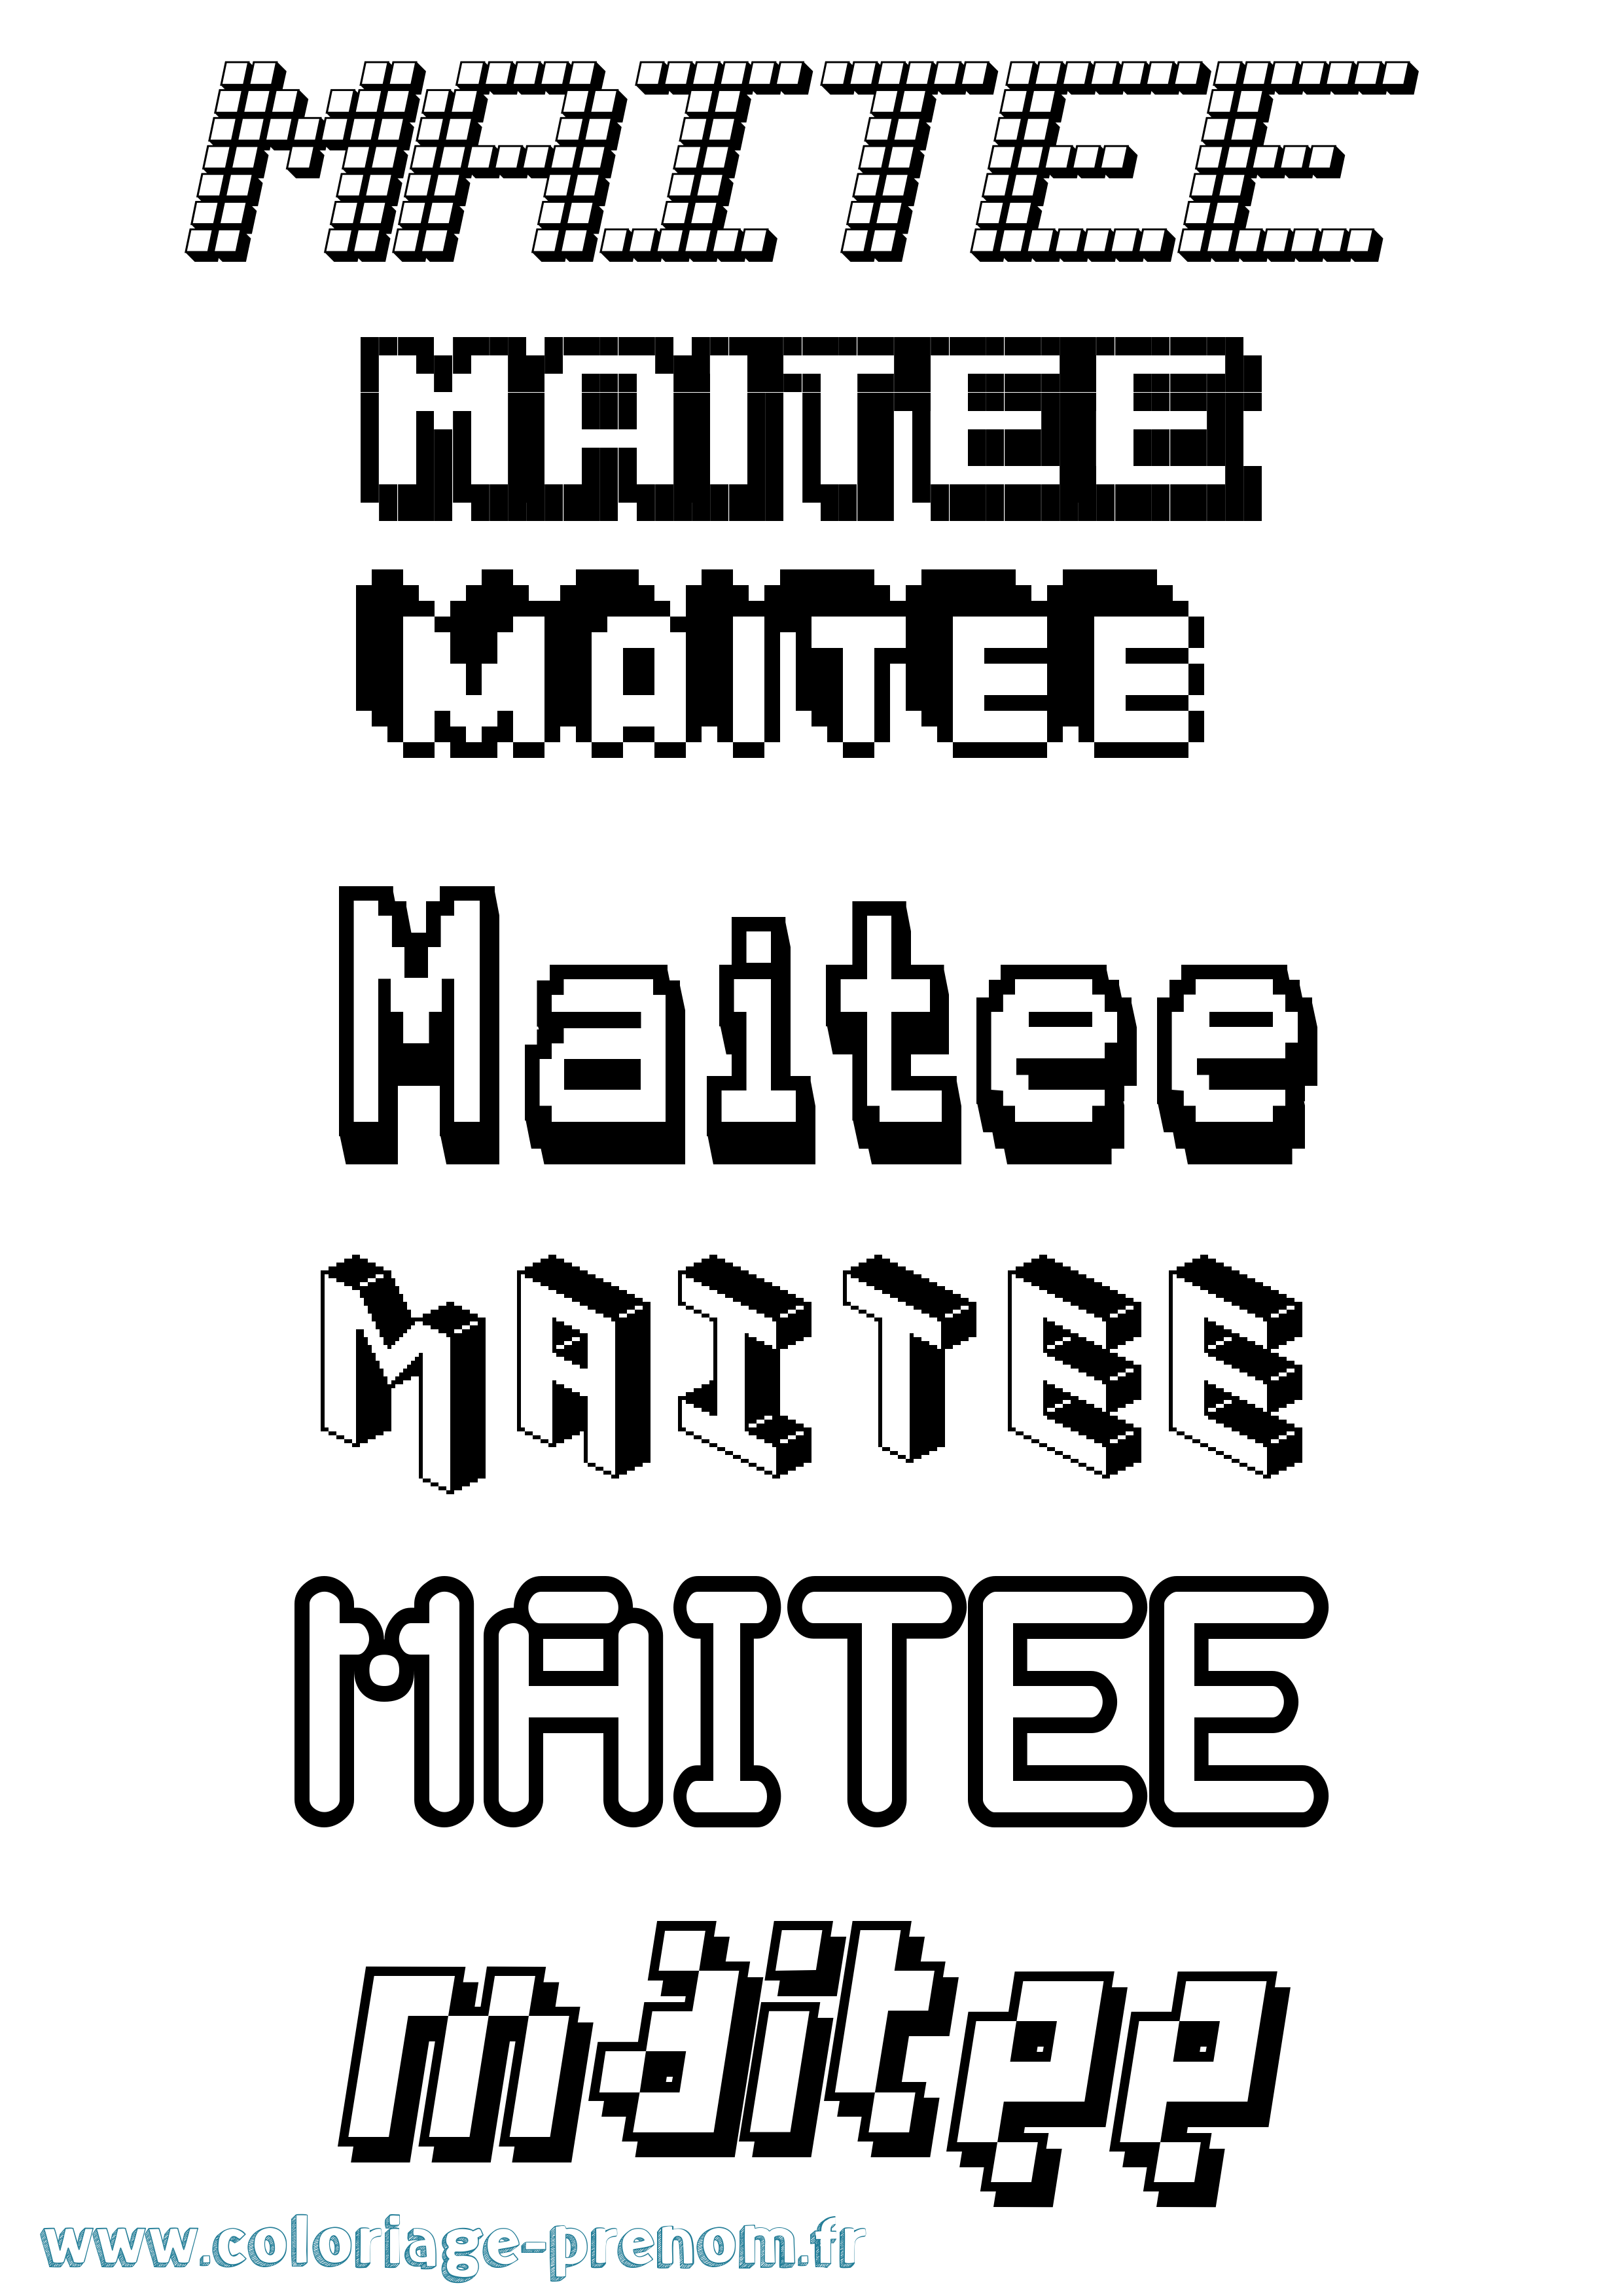 Coloriage prénom Maitee Pixel